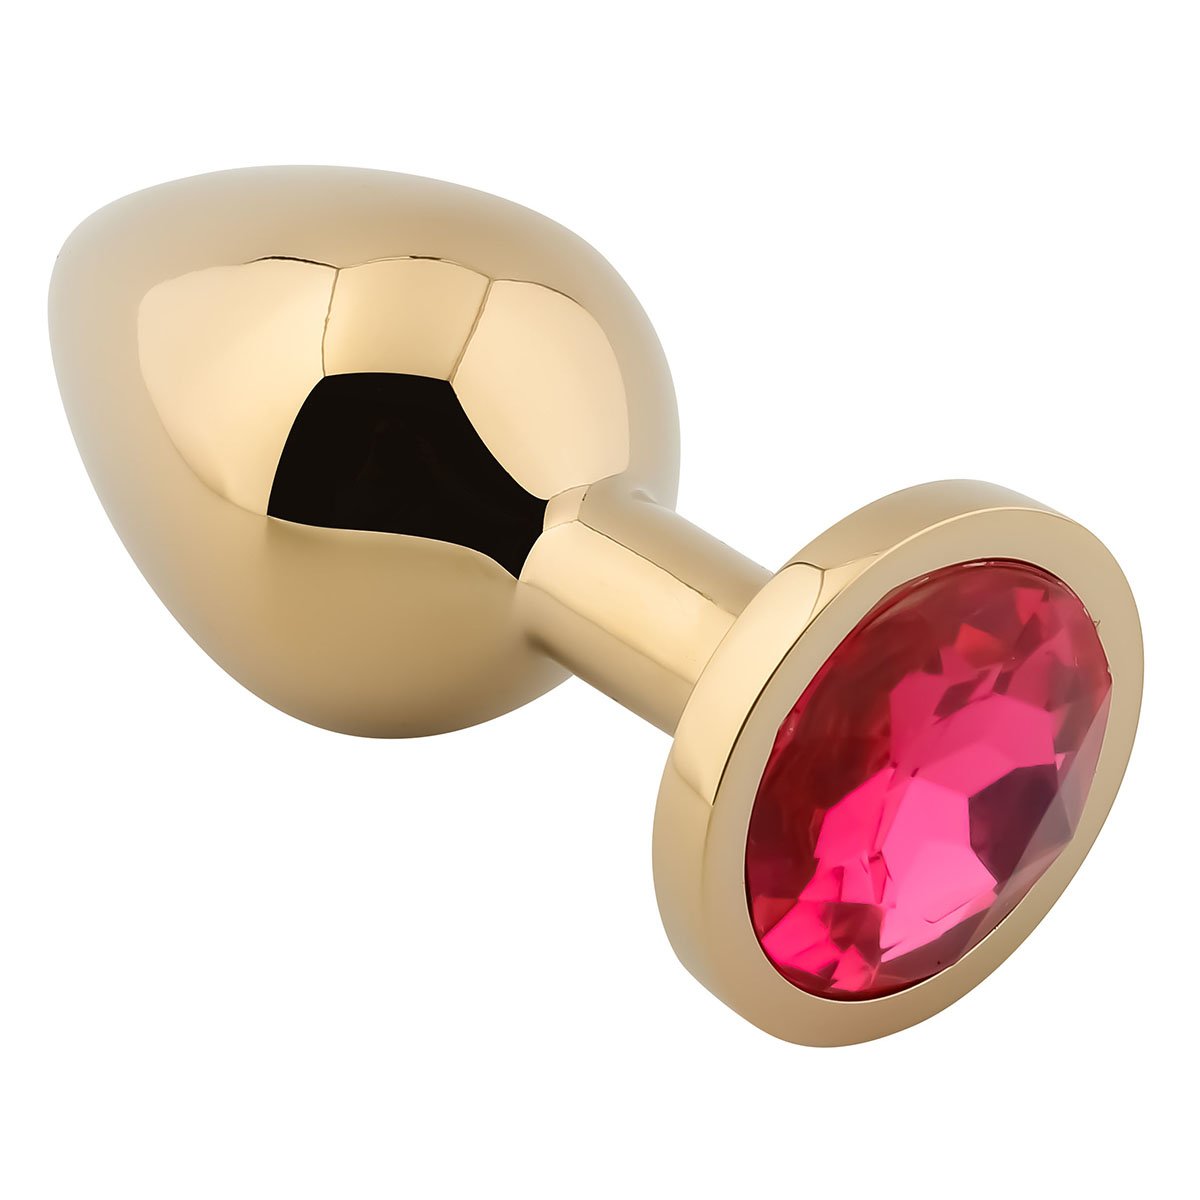 Foto van Banoch - Buttplug Aurora Hot Pink gold Small - gouden Metalen buttplug - Diamant steen - Roze